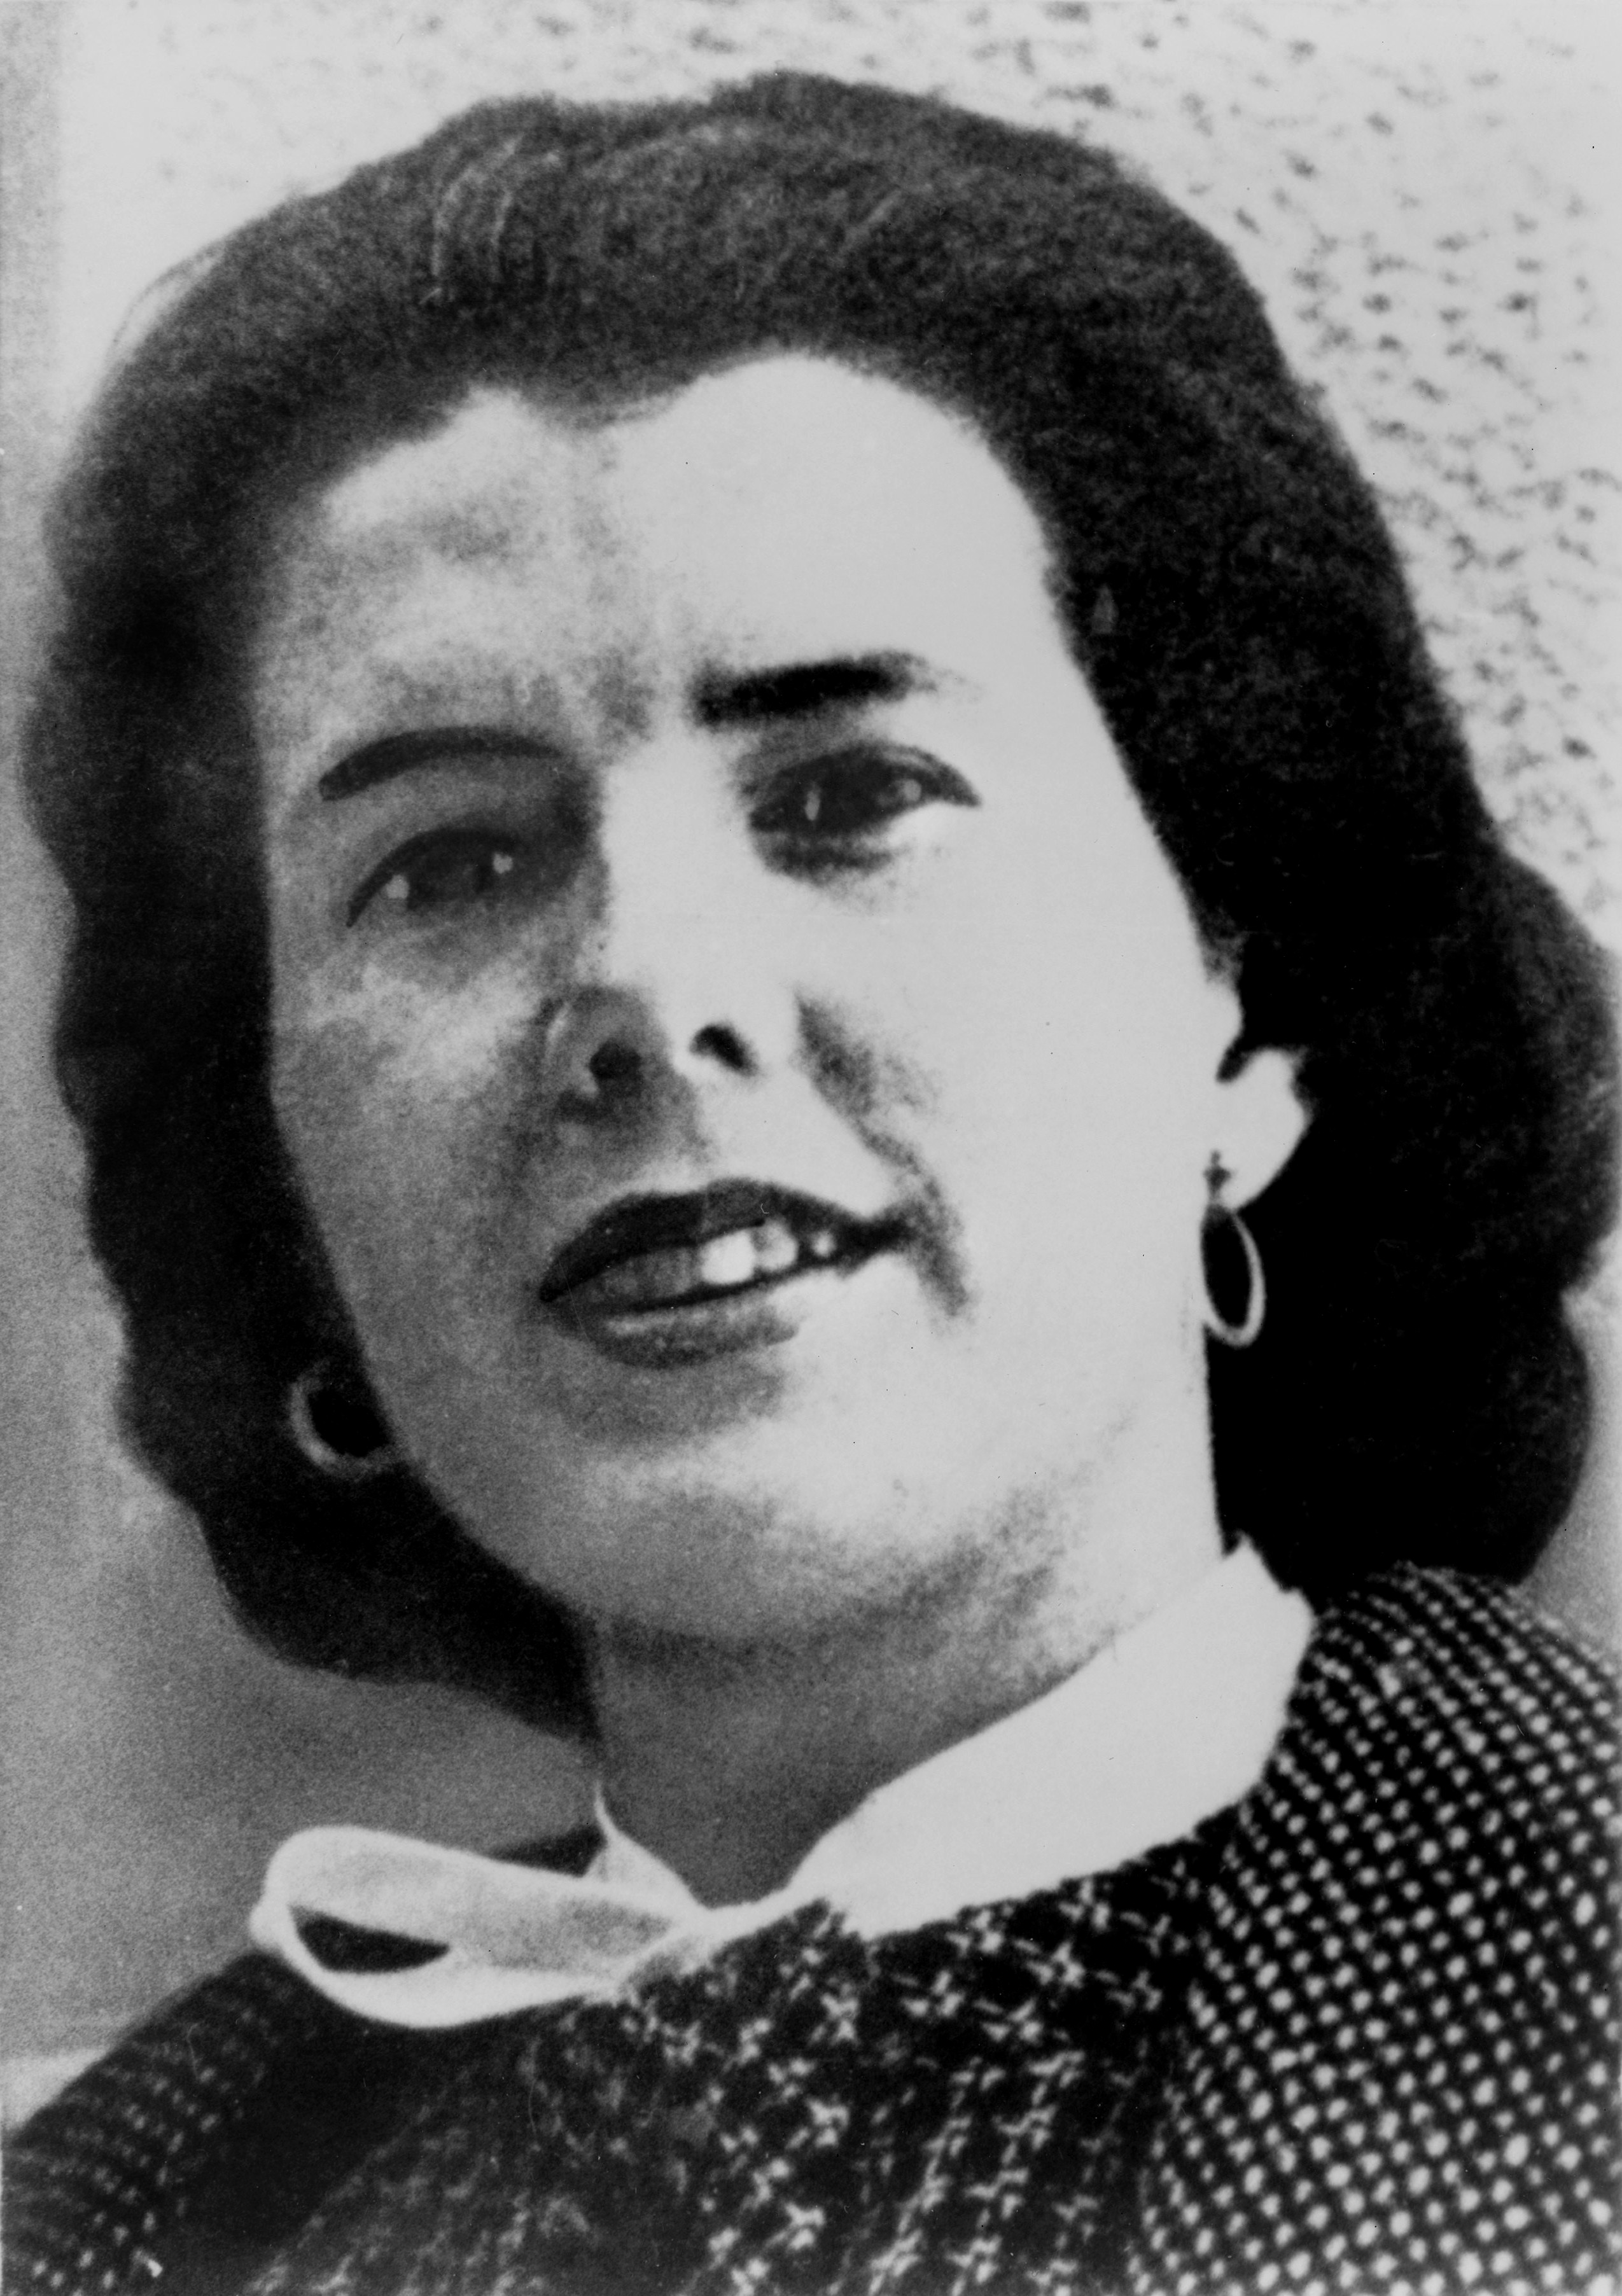 Grau in 1965